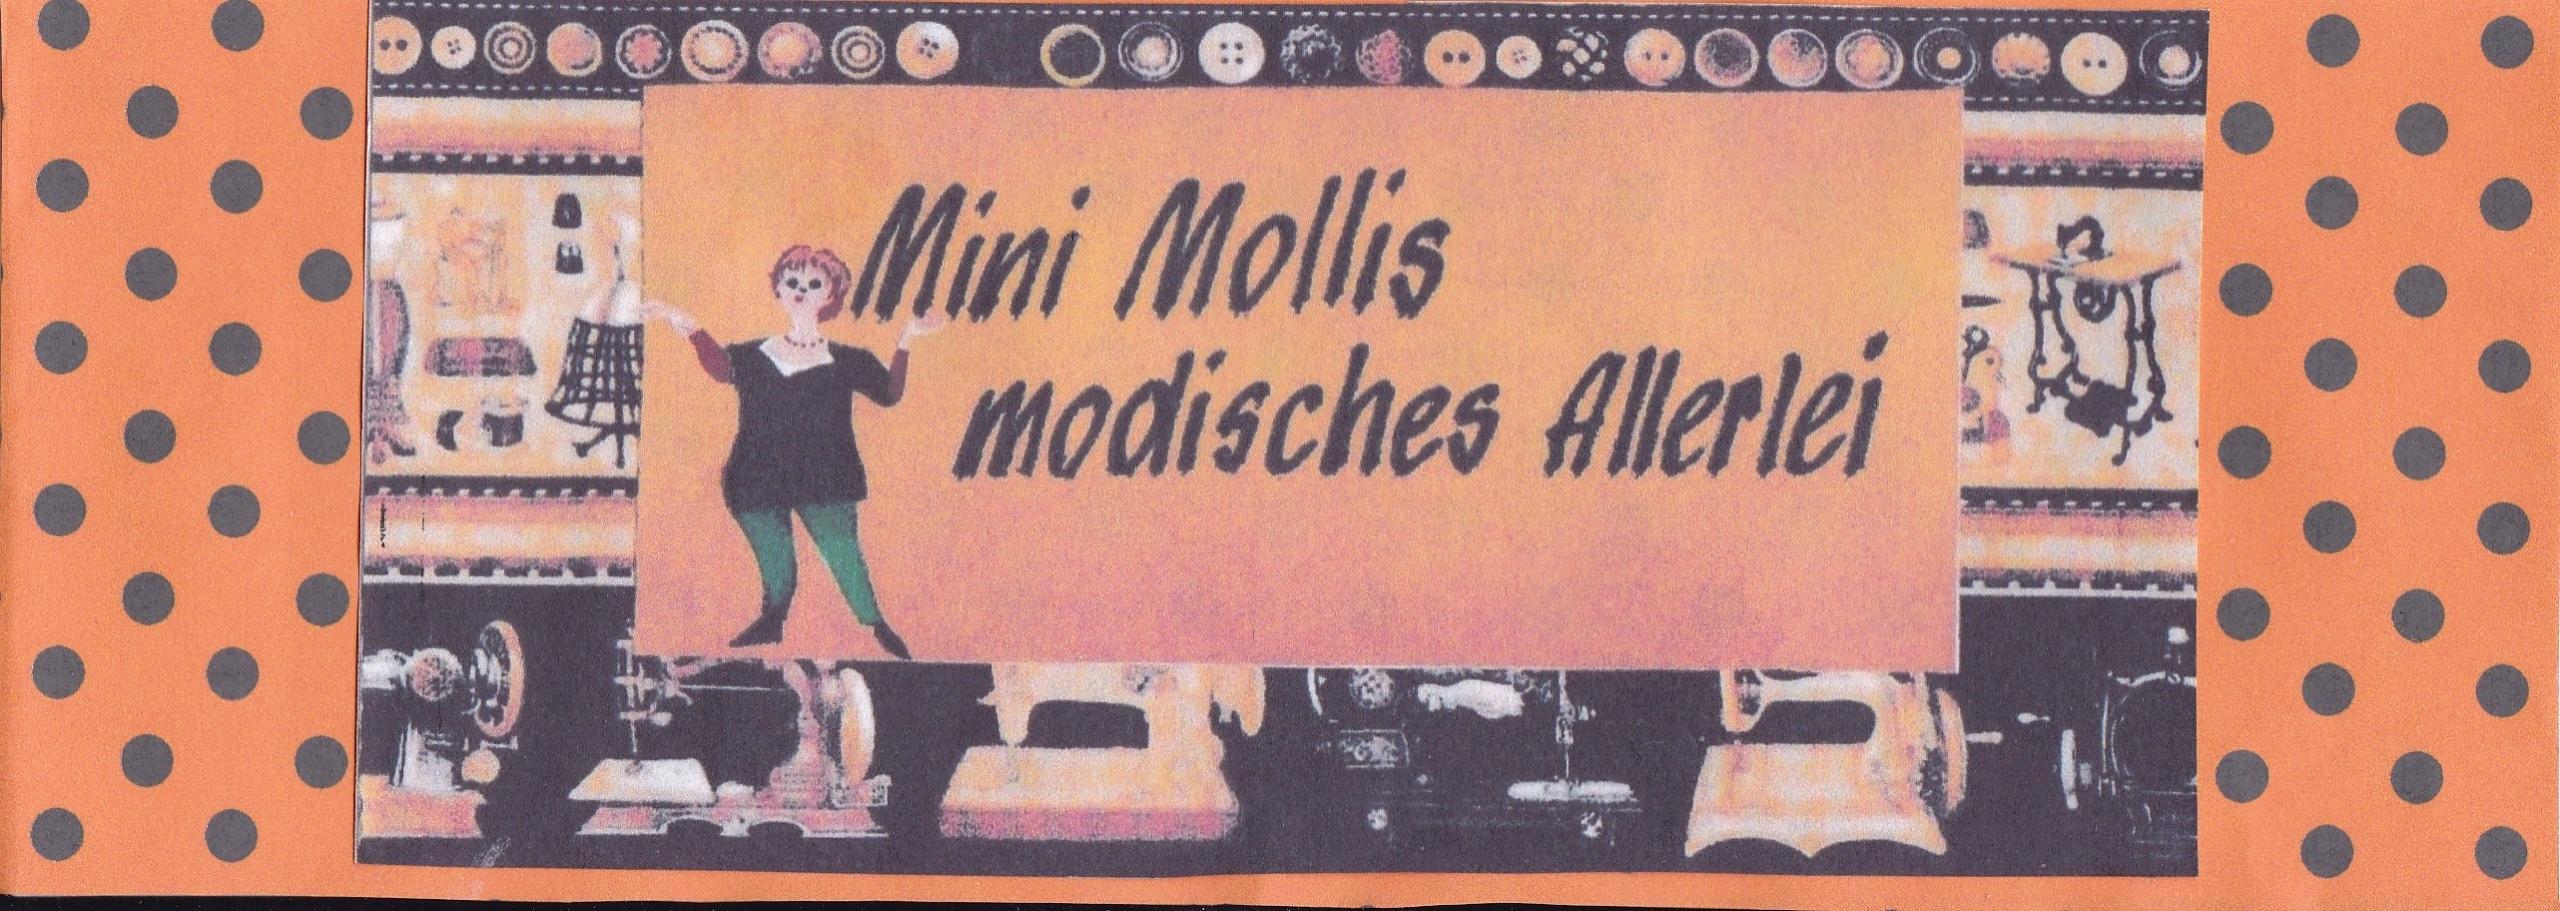 Mini Mollis modisches Allerlei